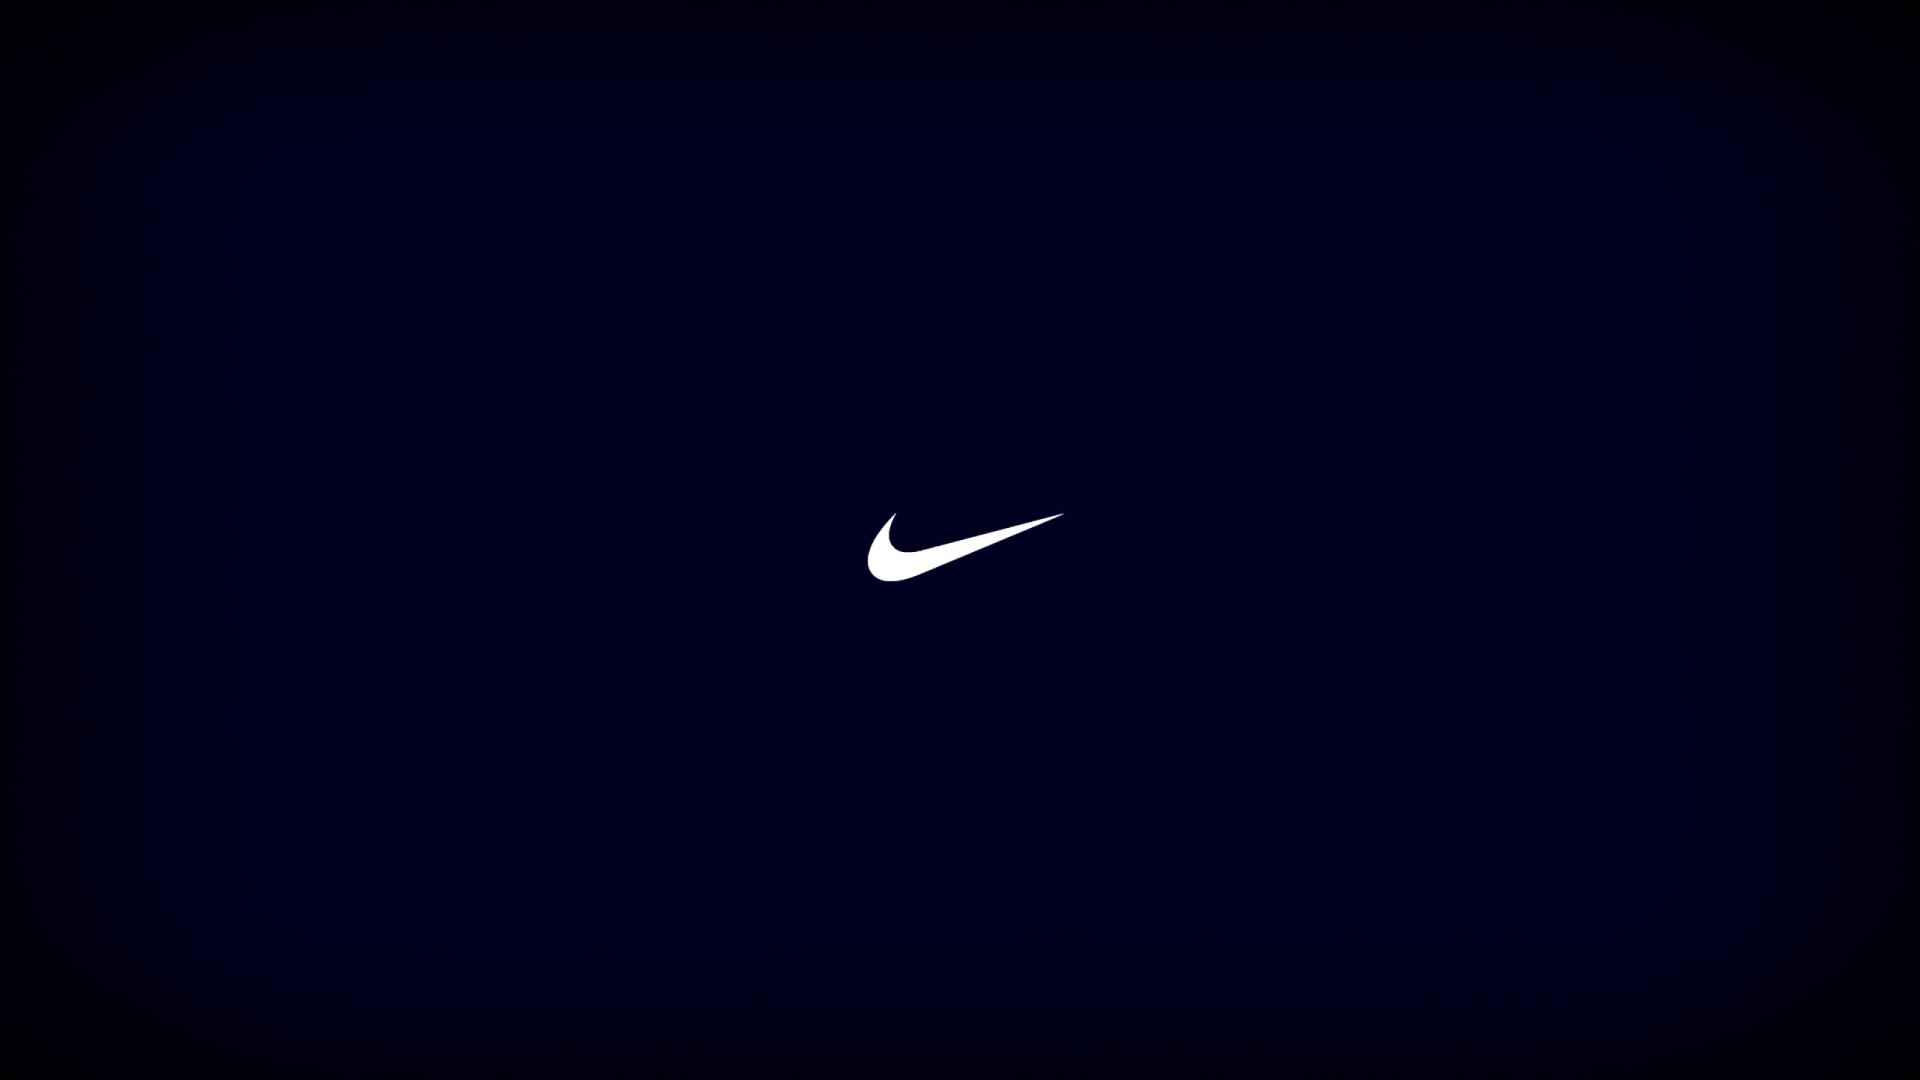 Nike Logo On The Blue Background Wallpaper Des Wallpaper High